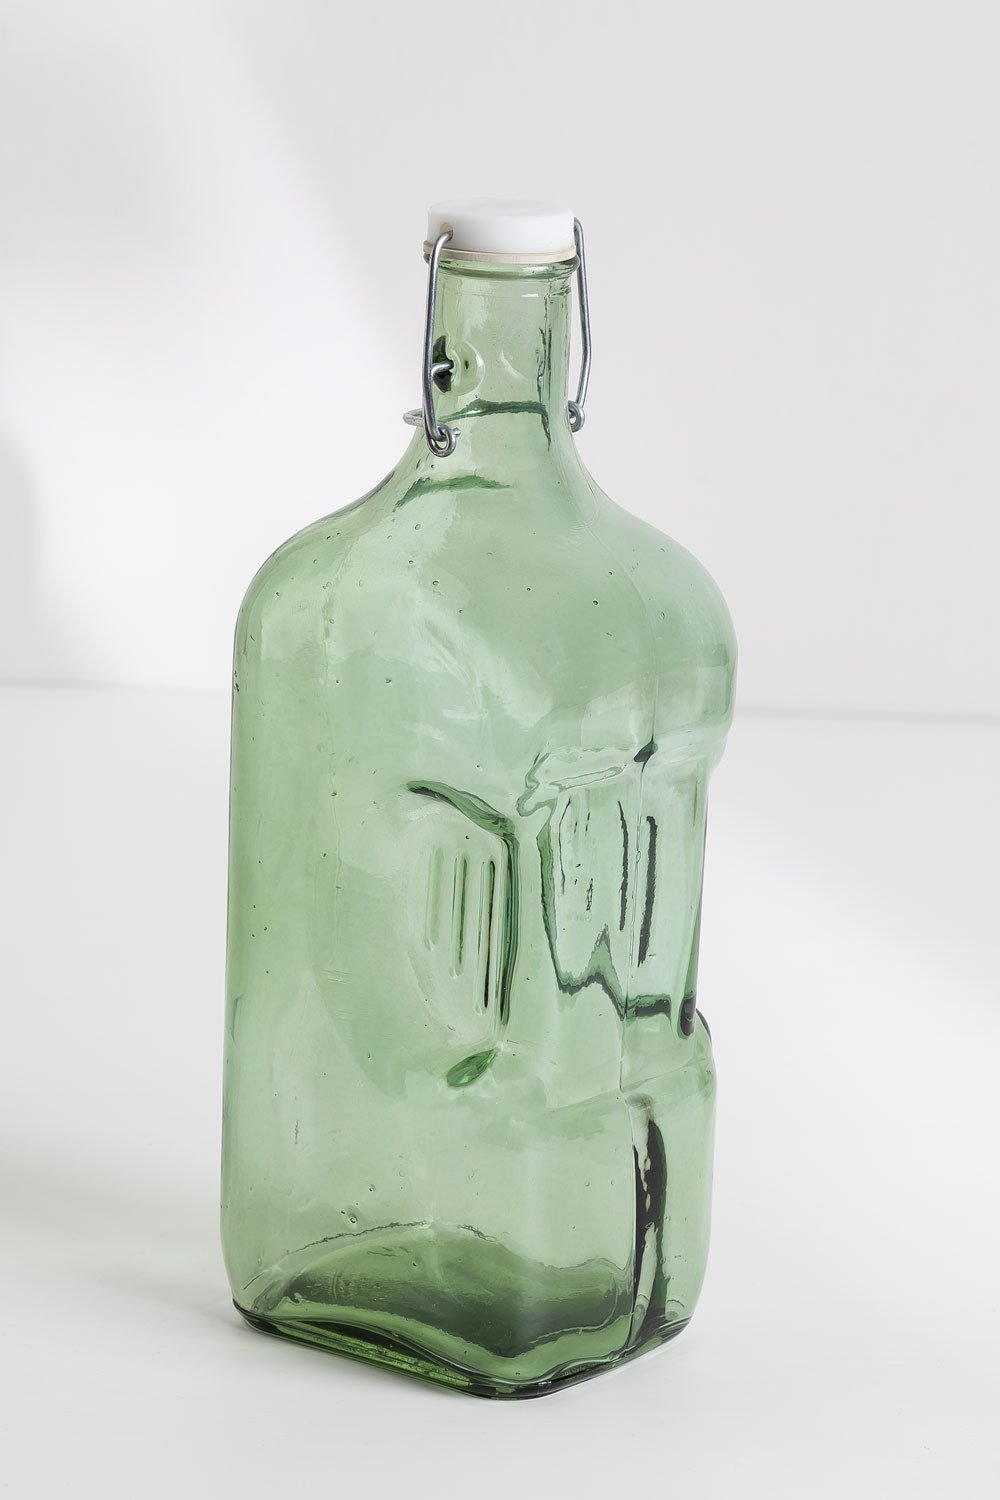 Botella Transparente 2L Vidrio Reciclado